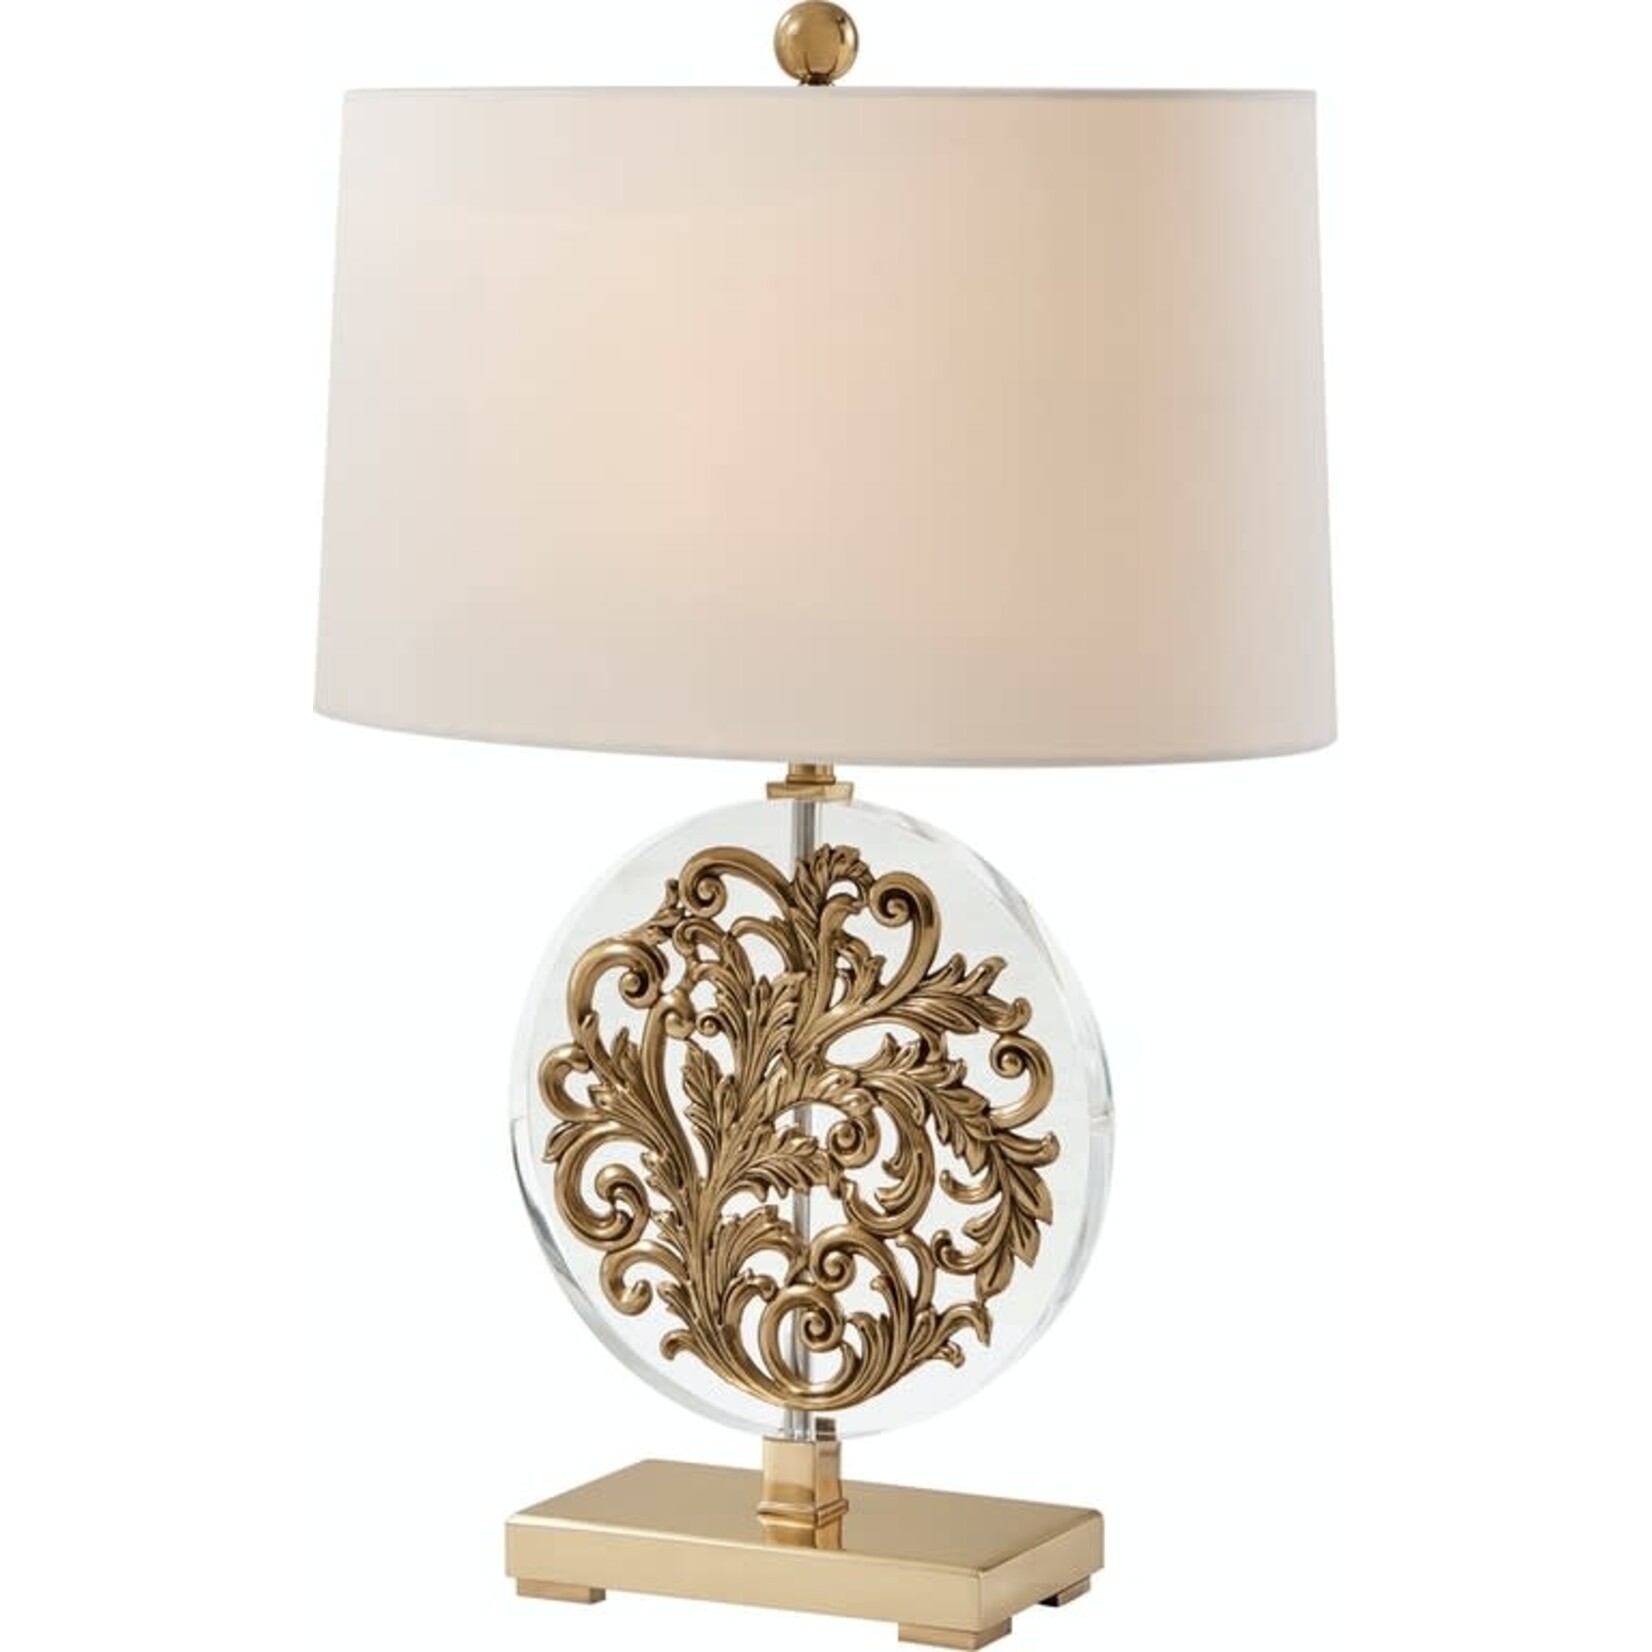 Theodore Alexander Pierrette Table Lamp